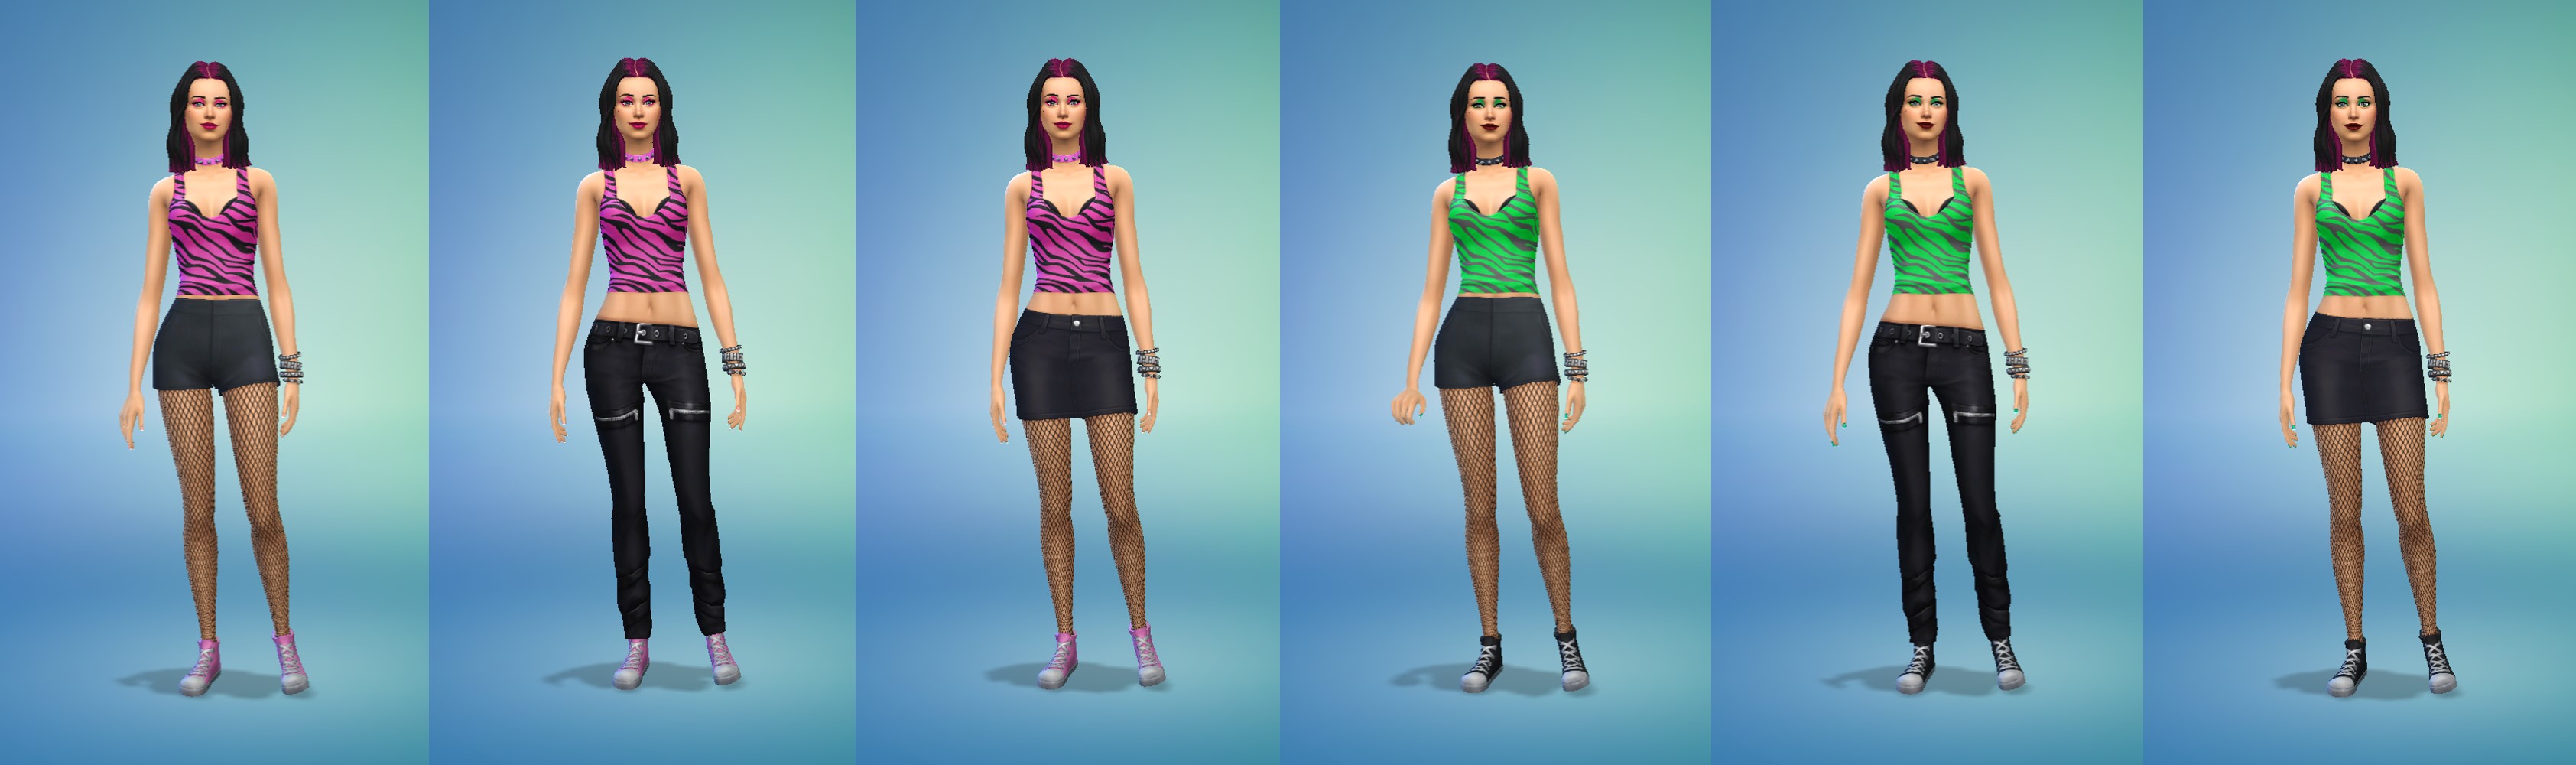 Custom Styled Looks: Set 1 - The Sims 4 Create a Sim - CurseForge